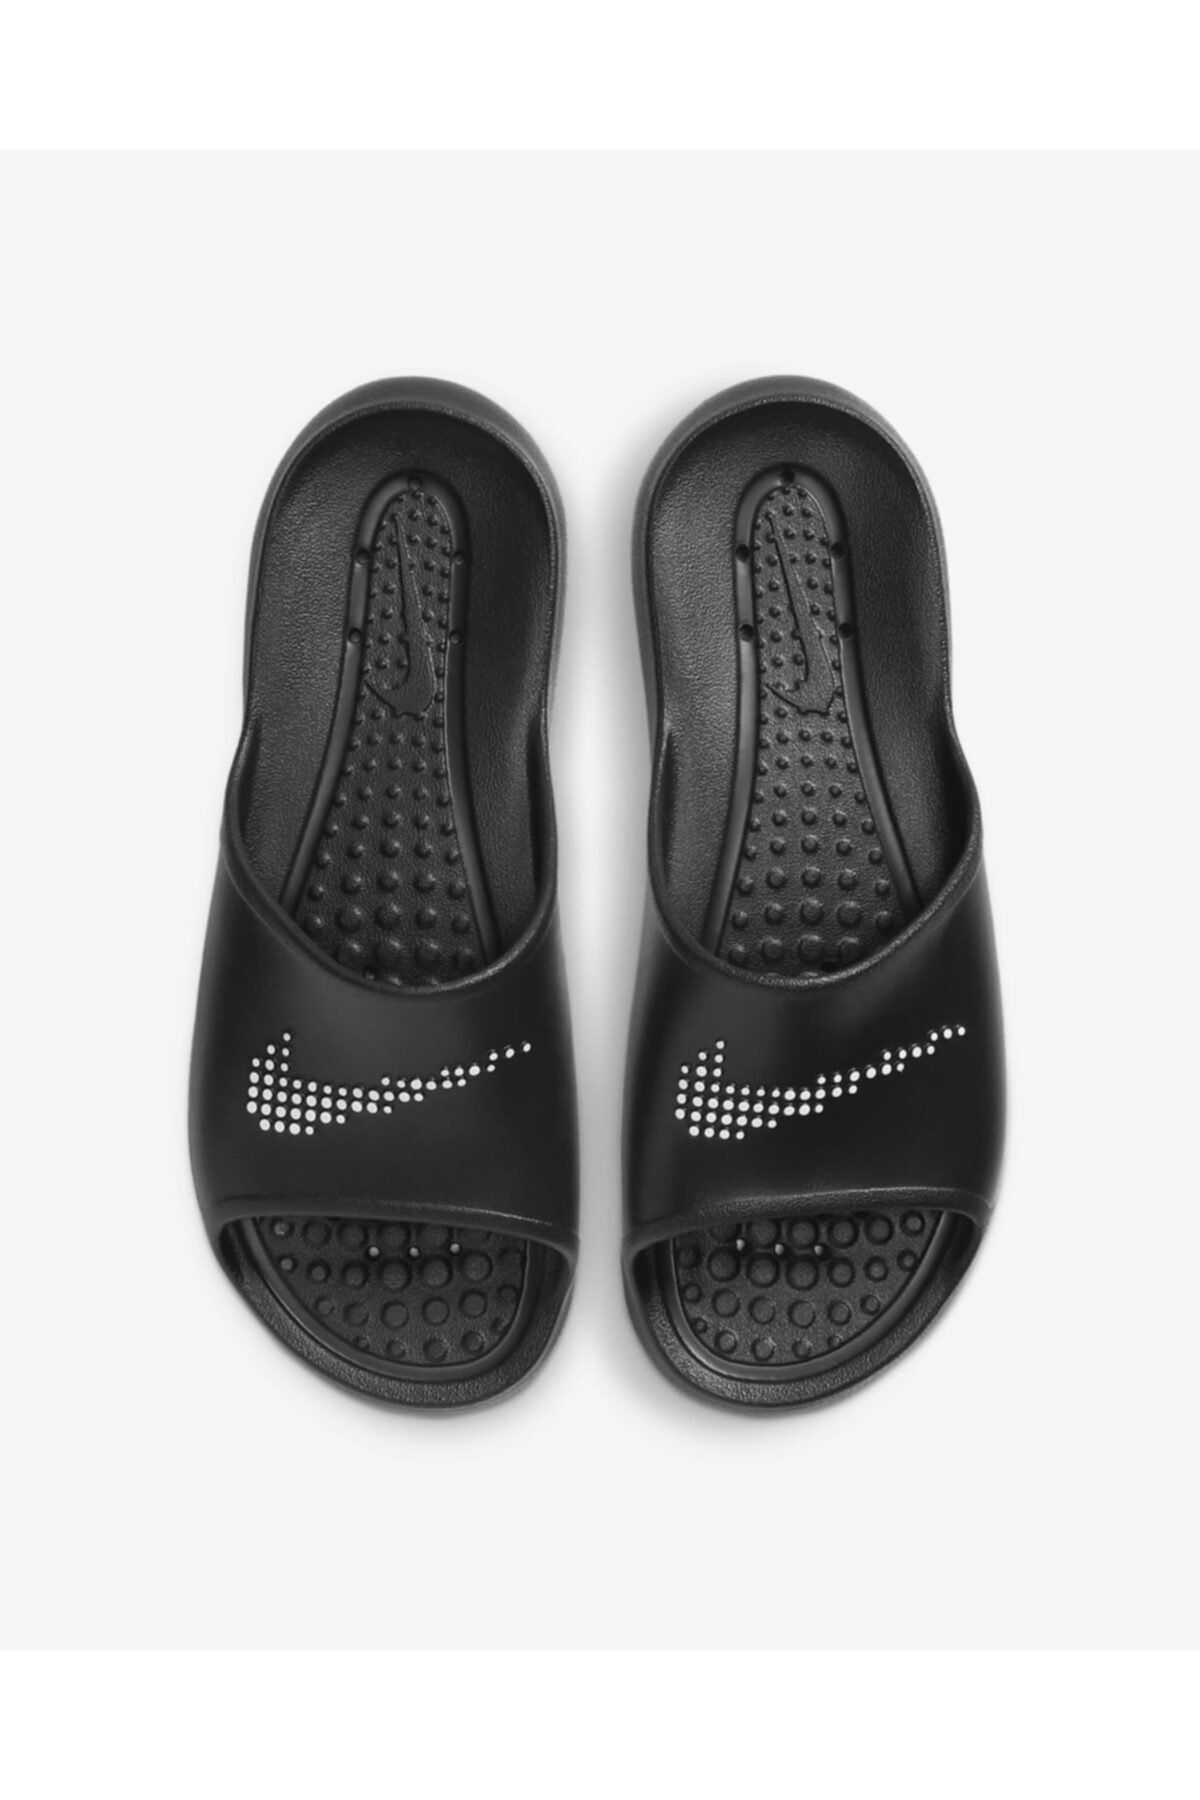 Nike مردانه سیاه ویکتوریا یک حمام slıde slippers cz5478-001